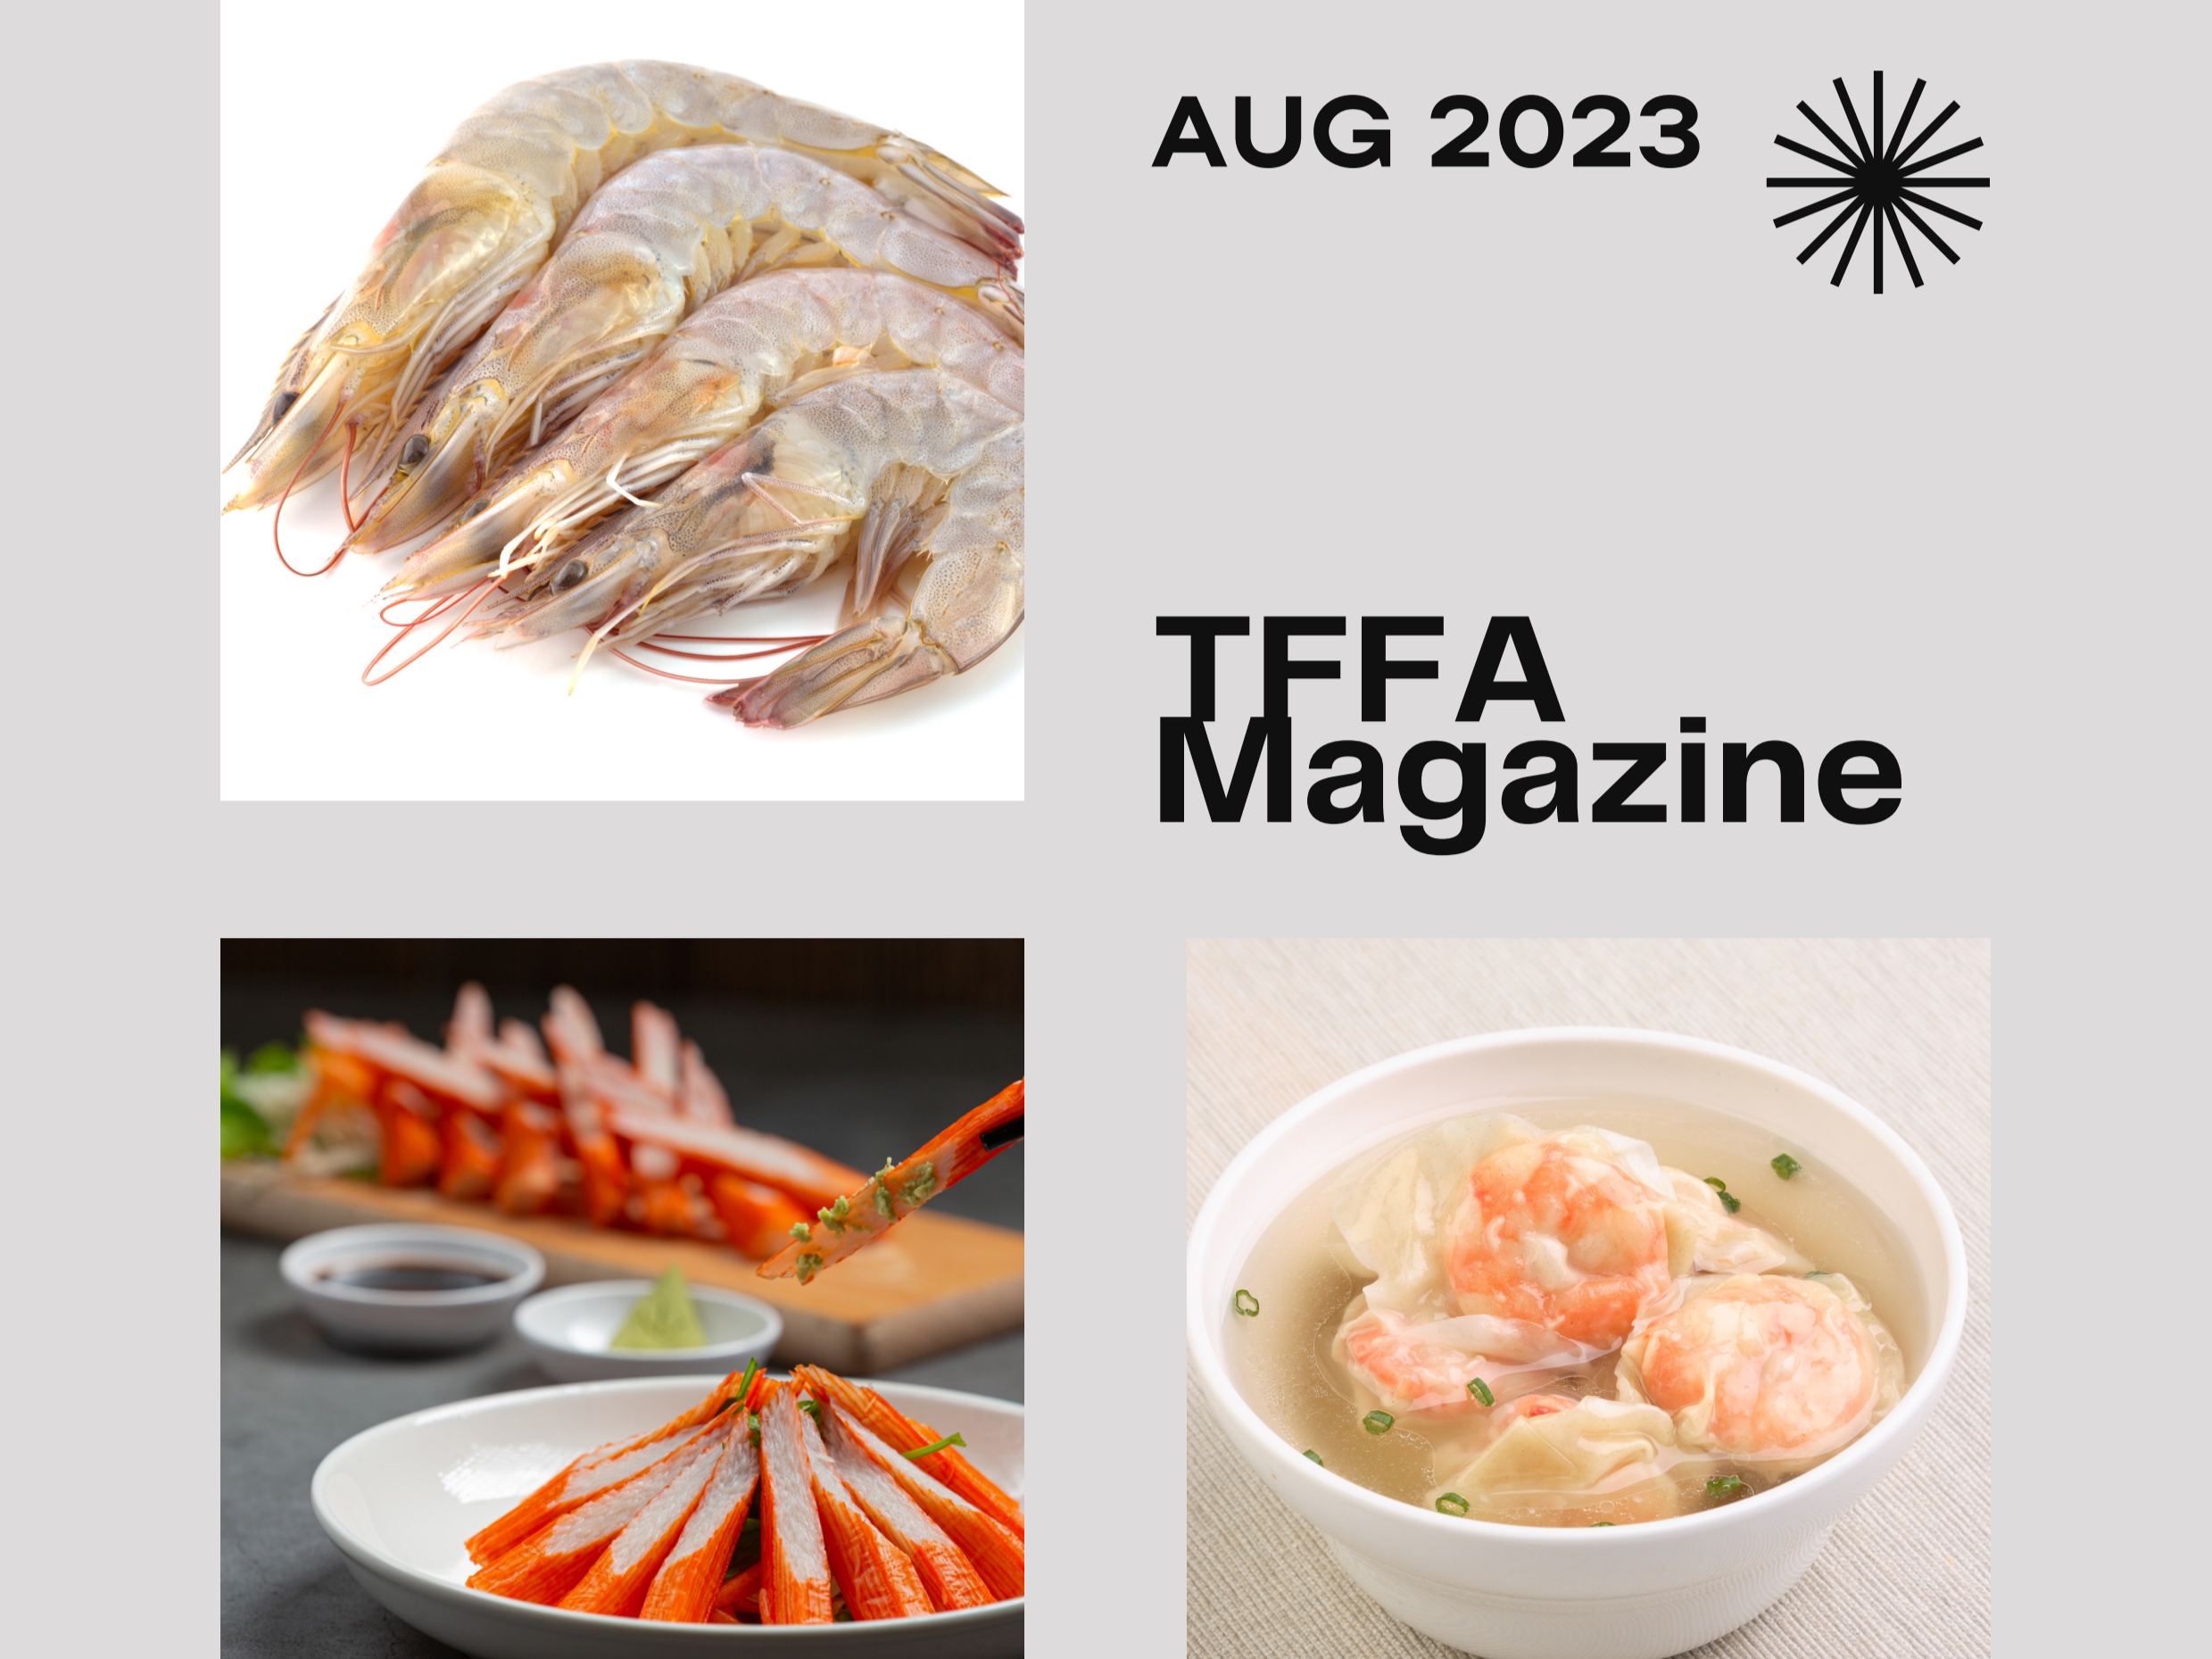 TFFA Magazine ประจำเดือนสิงหาคม 2566